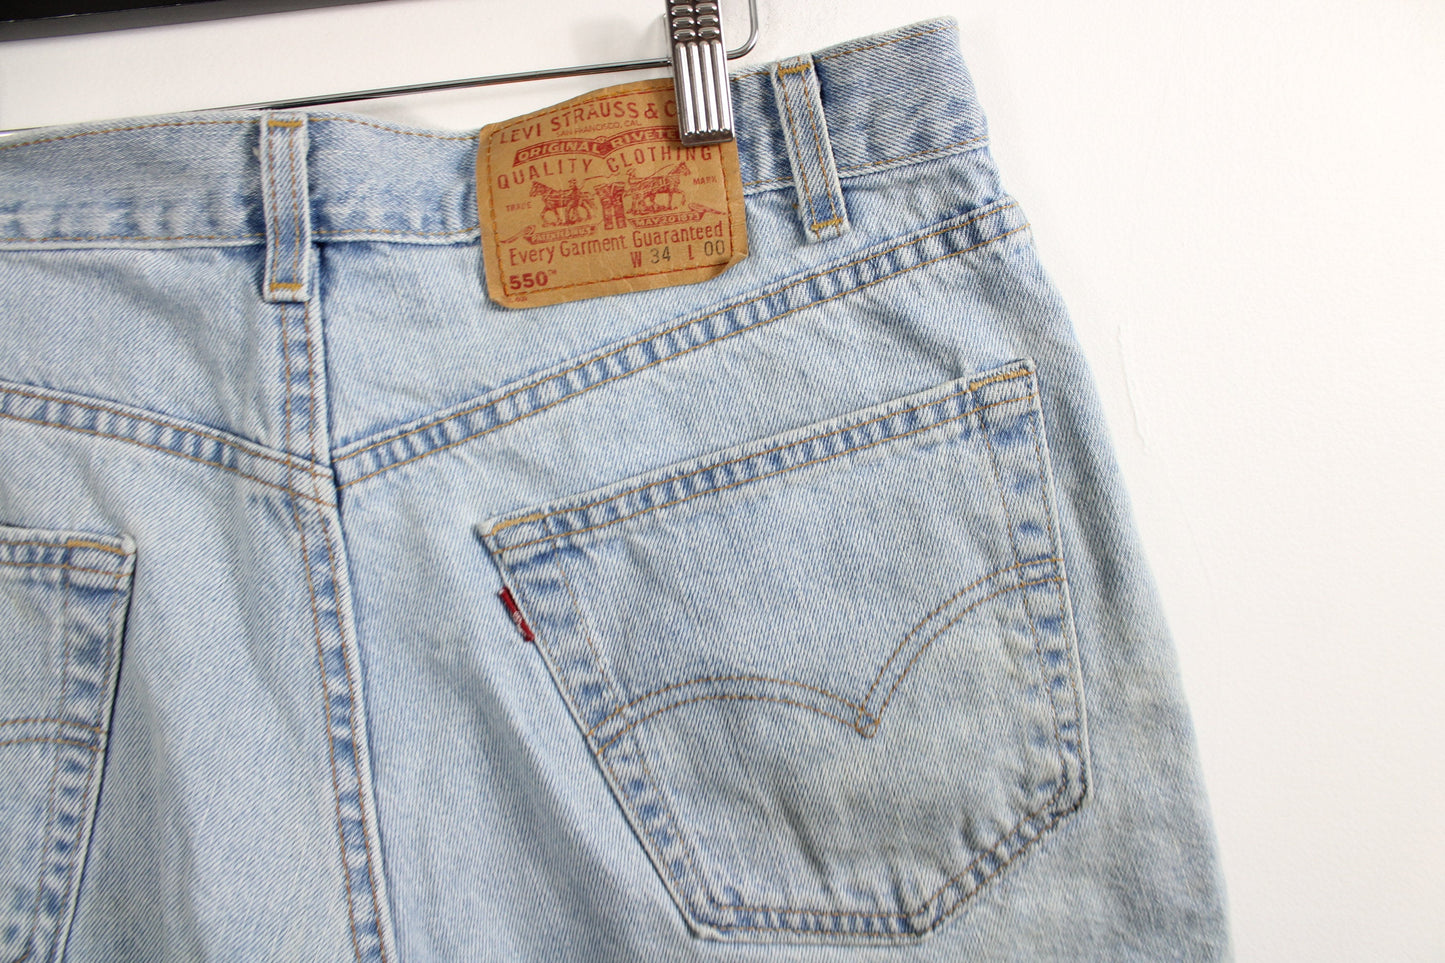 Levis 505 Jean Shorts / 90s Vintage Blue Levi's Strauss Denim Jorts Streetwear / Hip Hop Clothing / Size 34